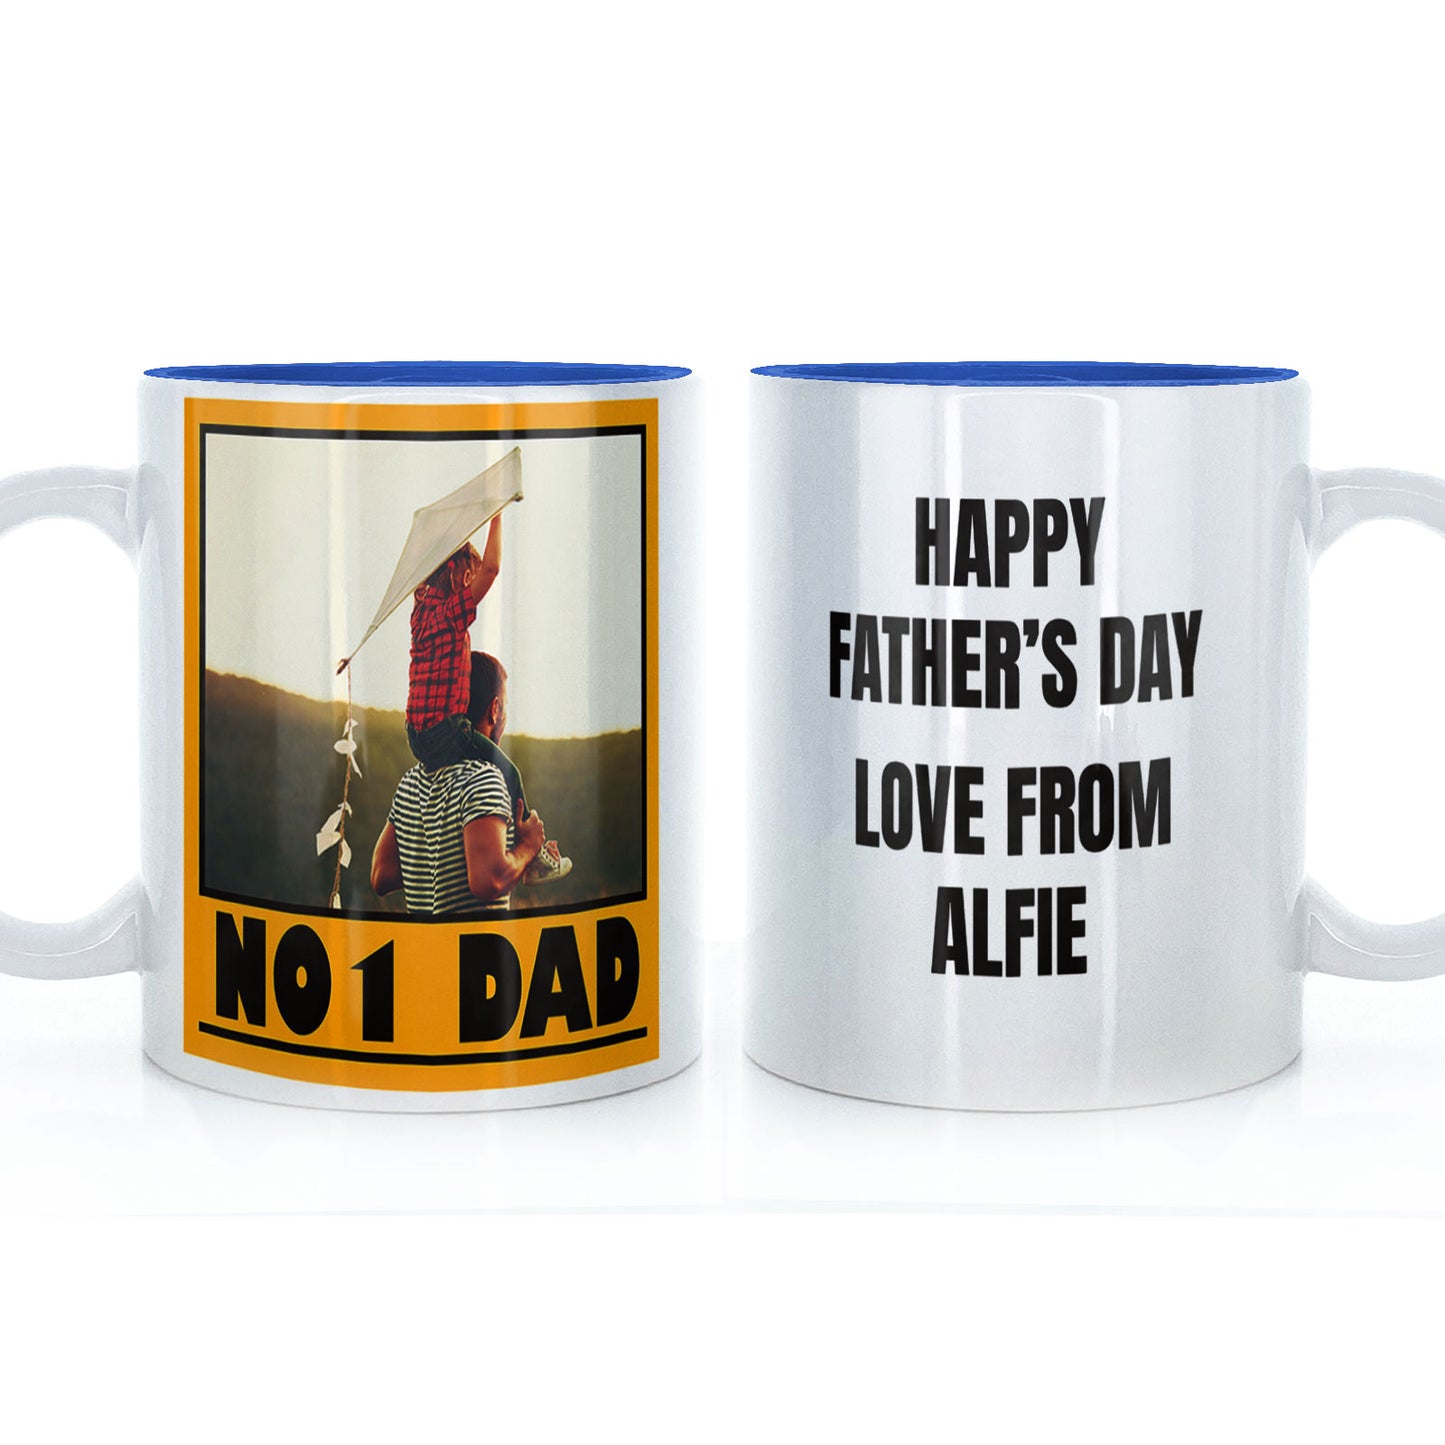 Personalised Father's Day Mug - No1. Dad Photo Upload